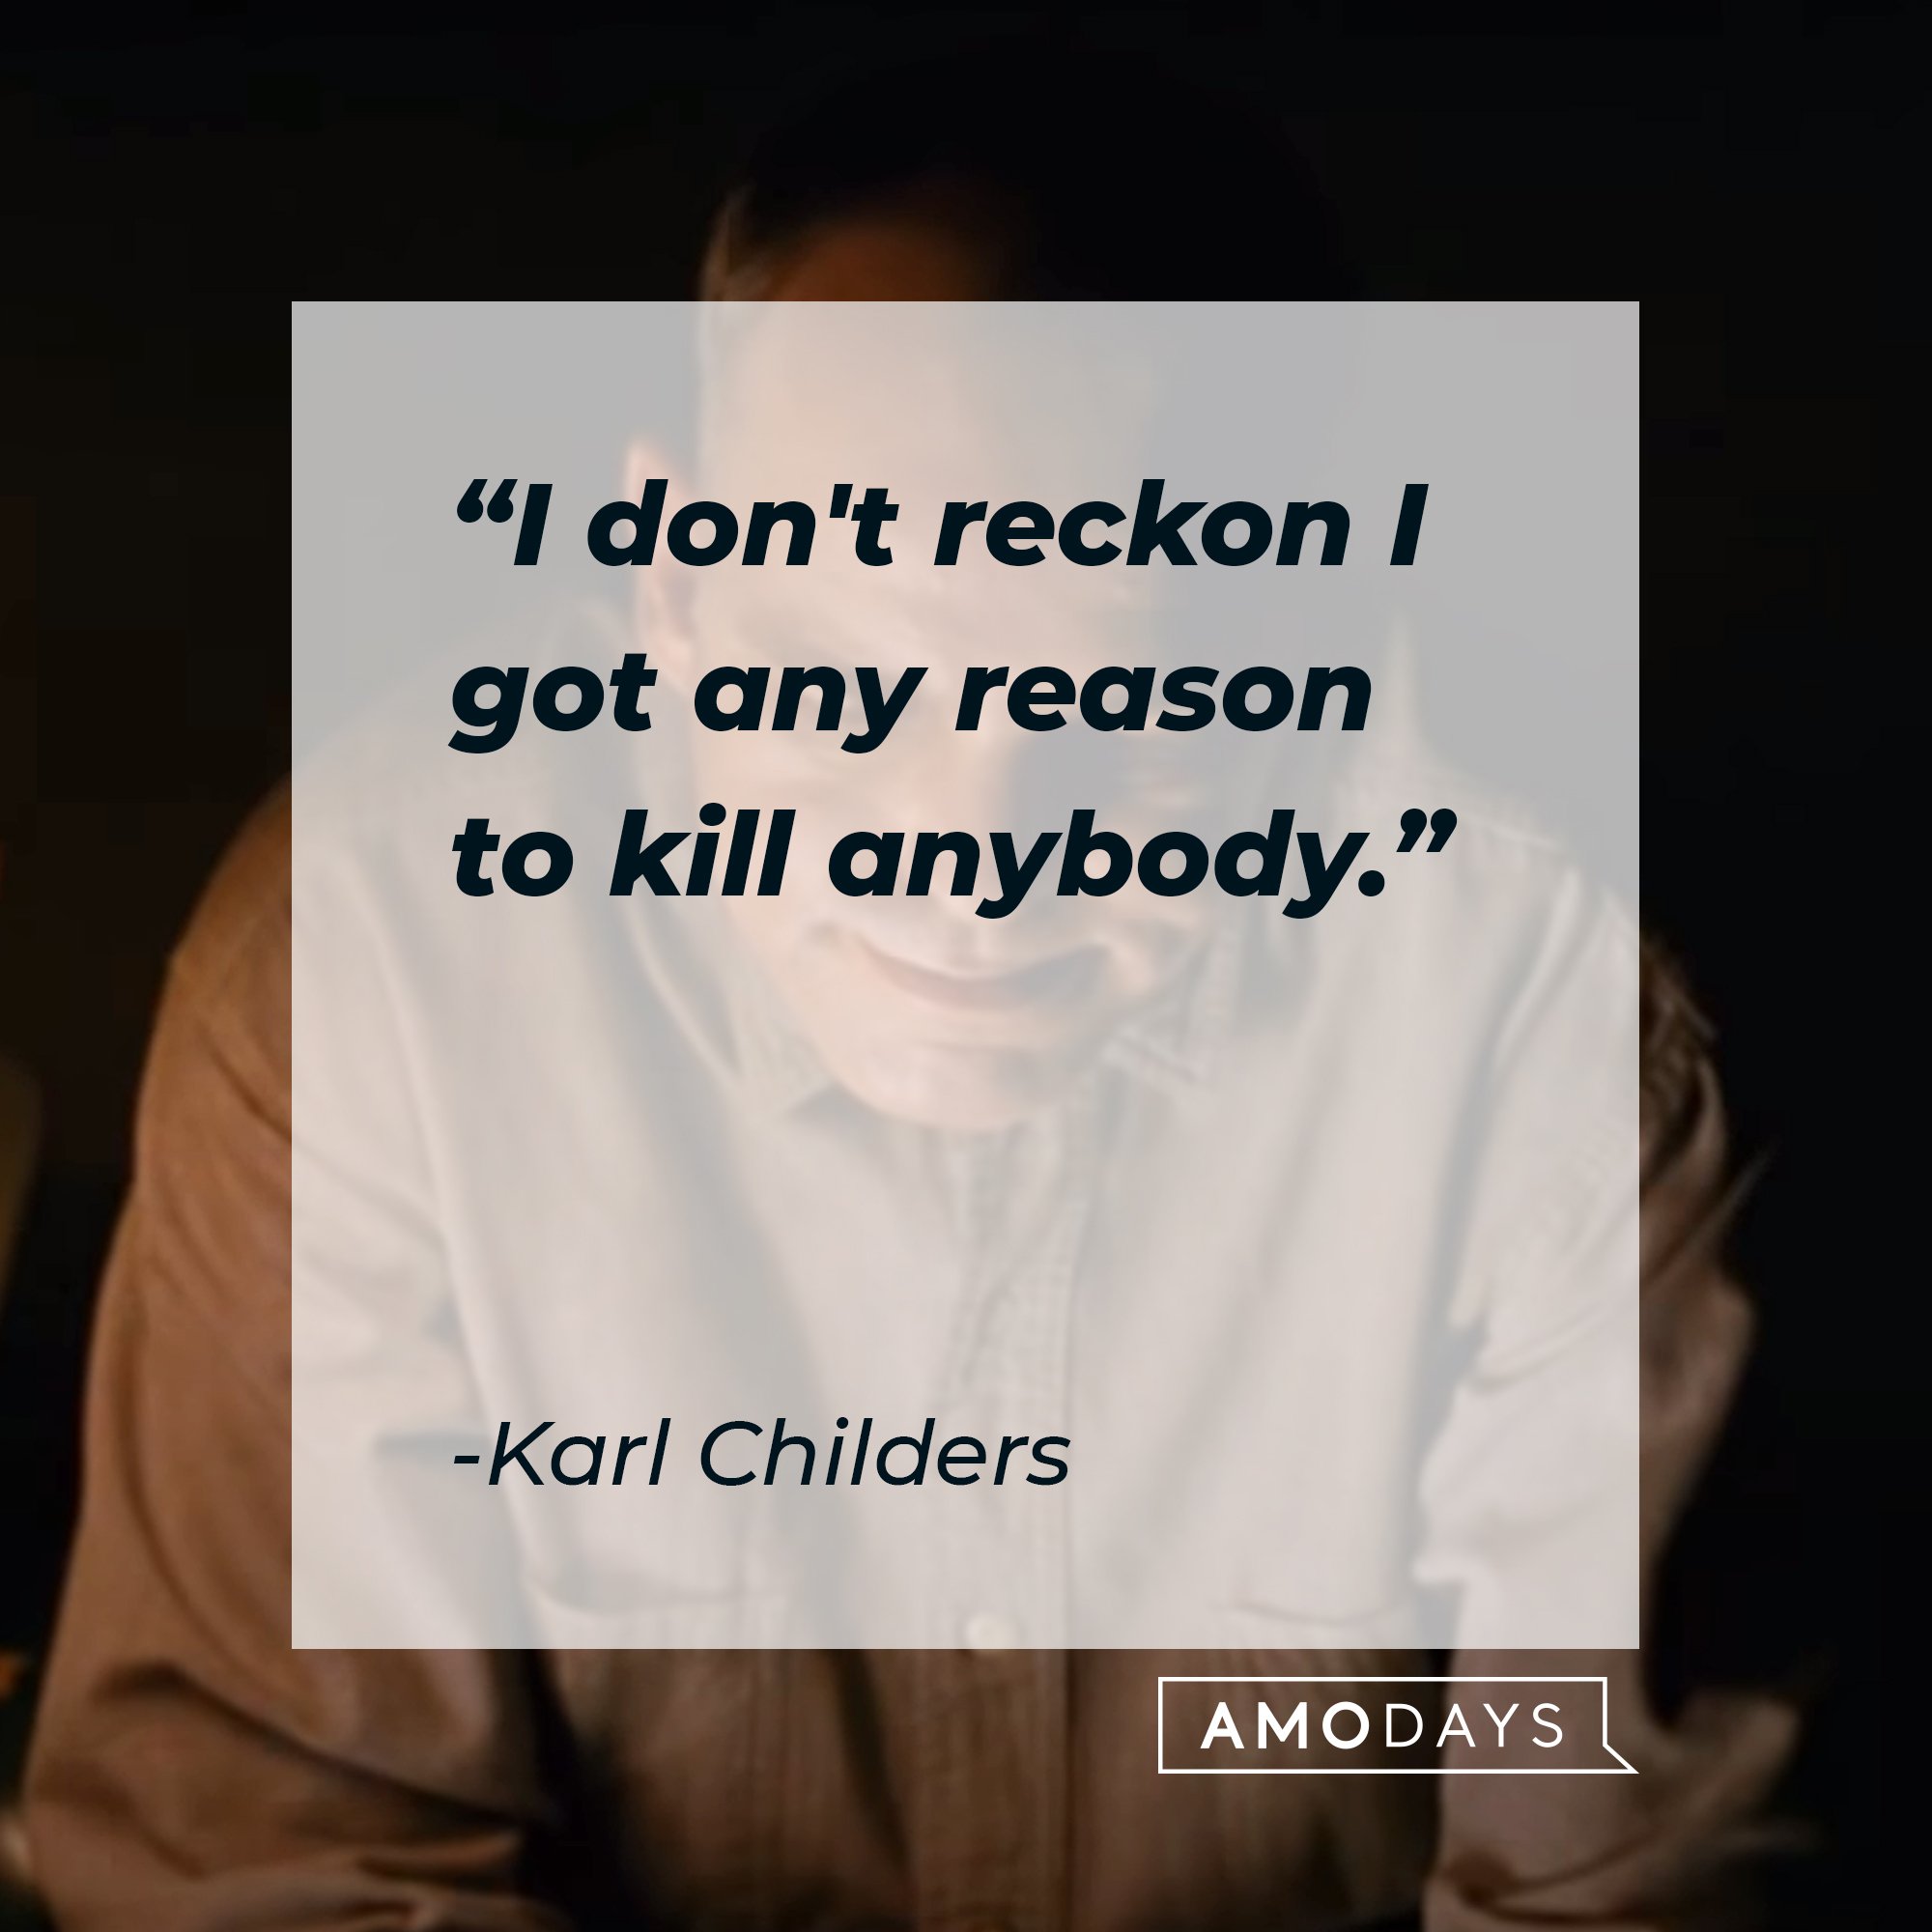 Karl Childers' quote: "I don't reckon I got any reason to kill anybody."  | Image: AmoDays